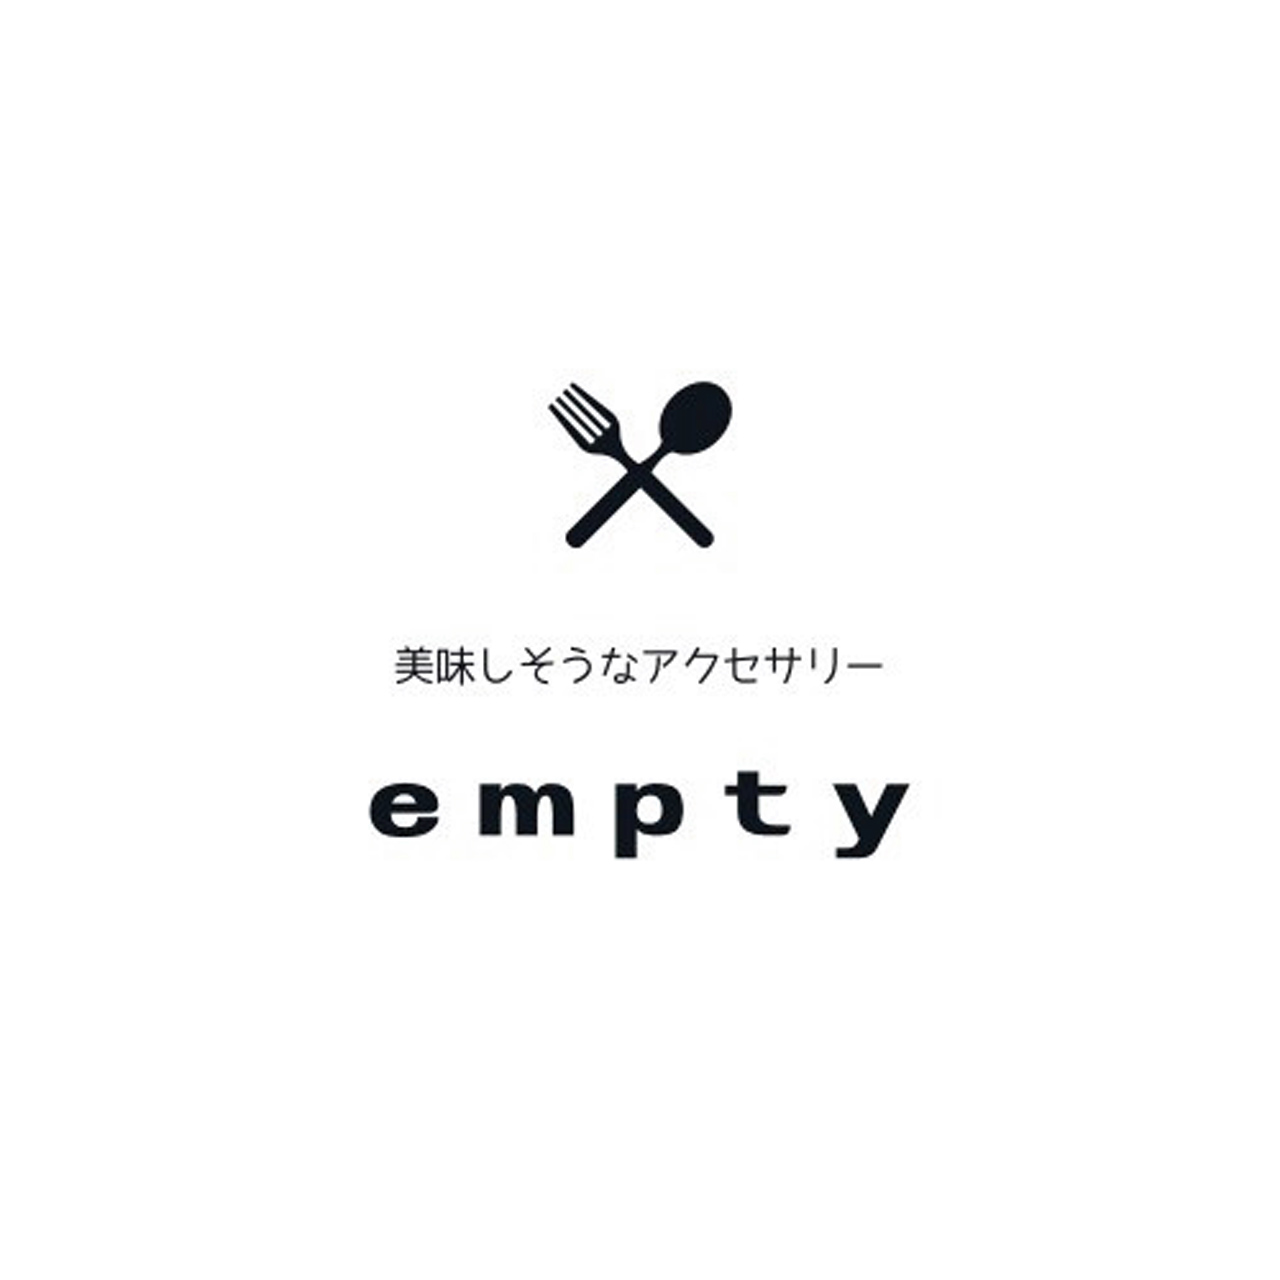 empty - エンプティ